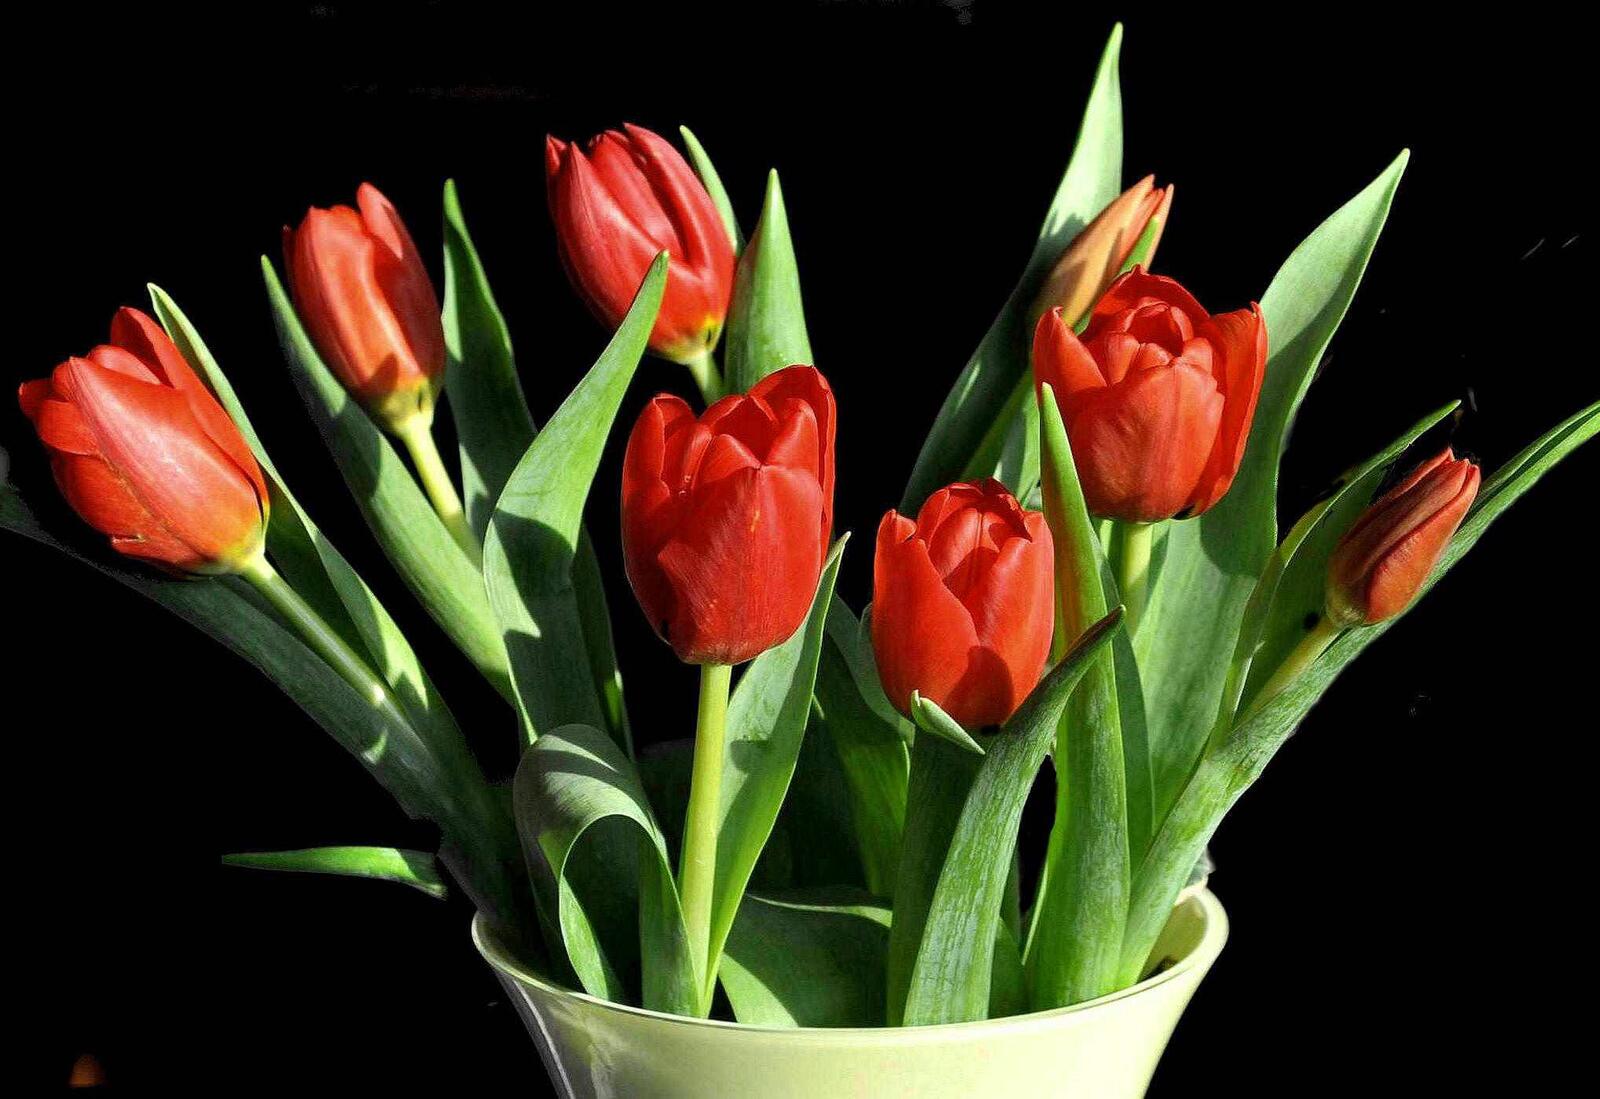 Обои цветы тюльпаны чёрный фон на рабочий стол